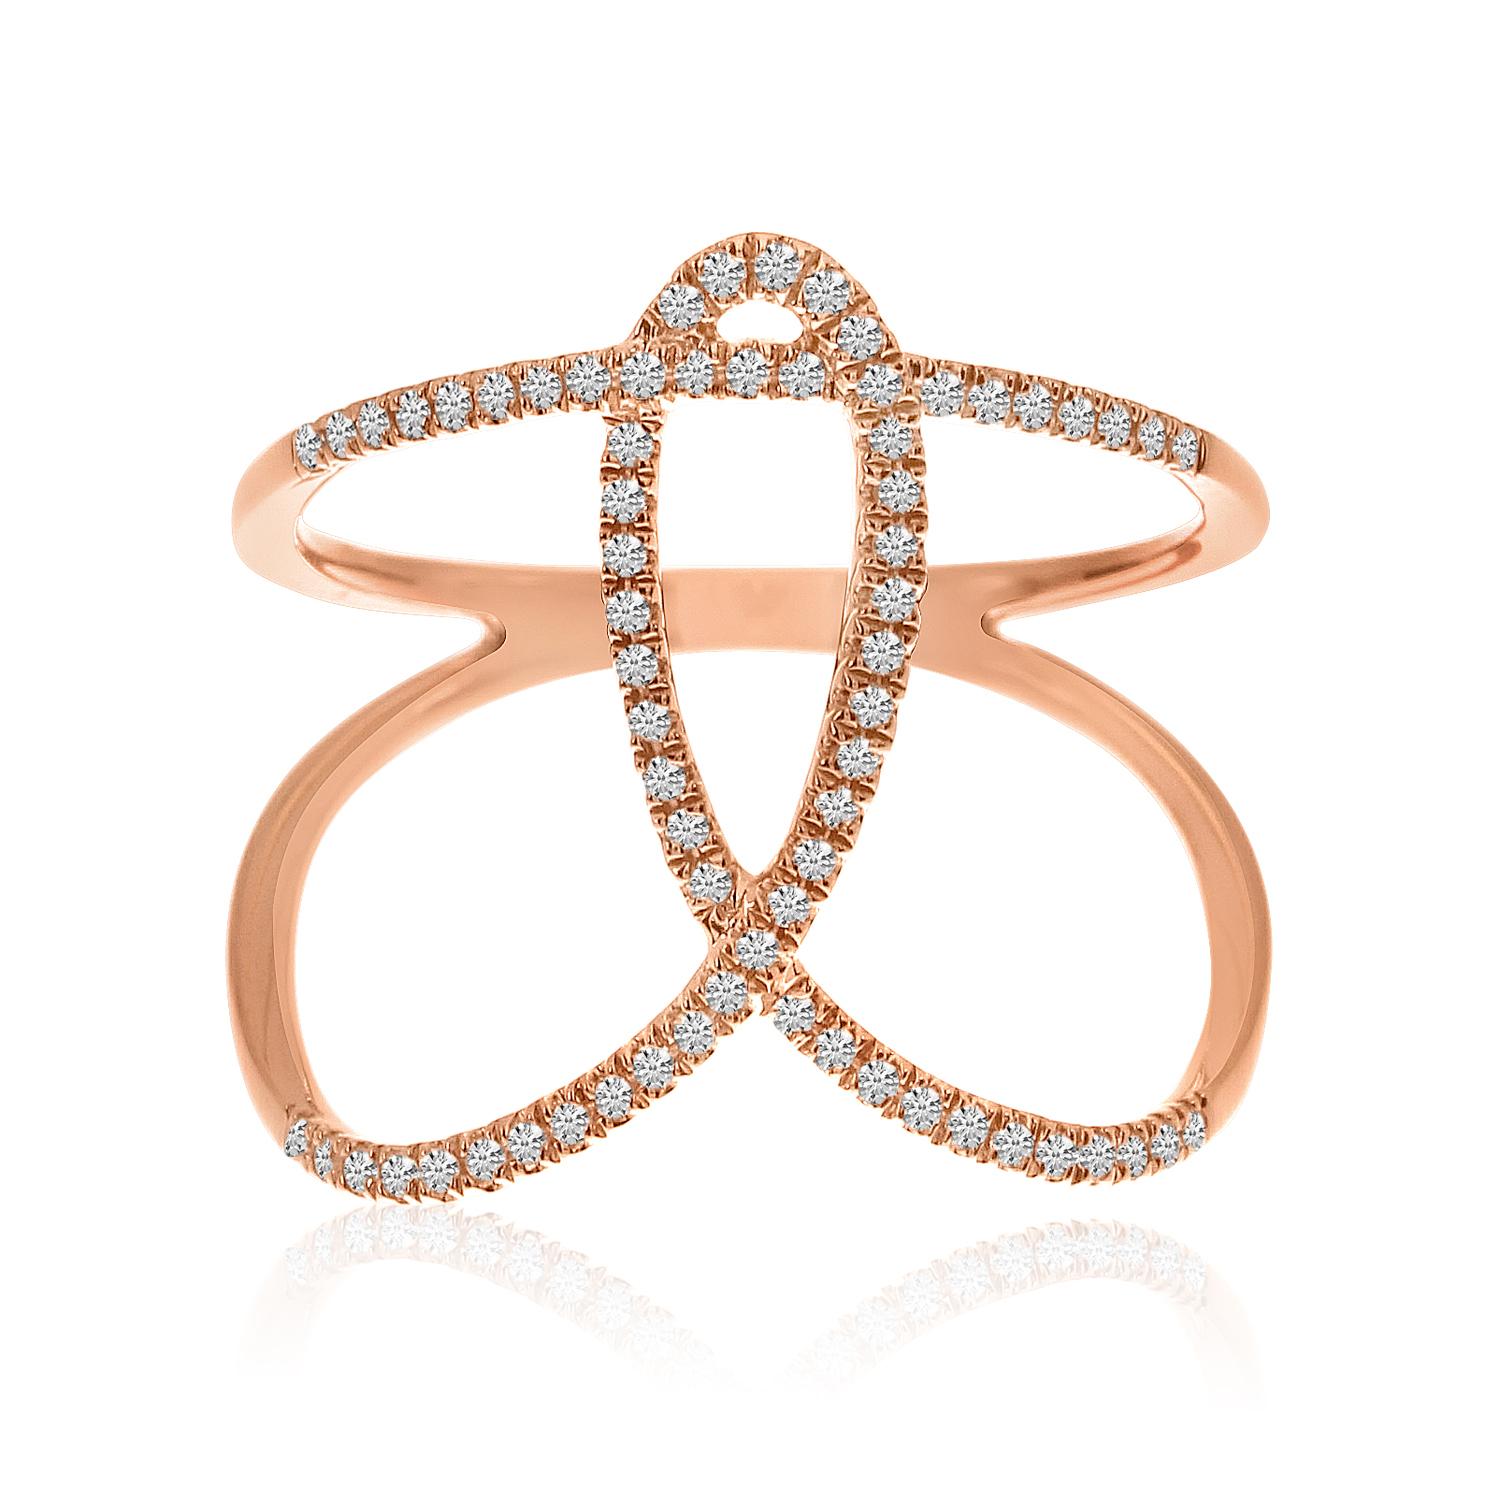 Colormerchants - 14K Rose Gold Knot Bypass Diamond Fashion Ring